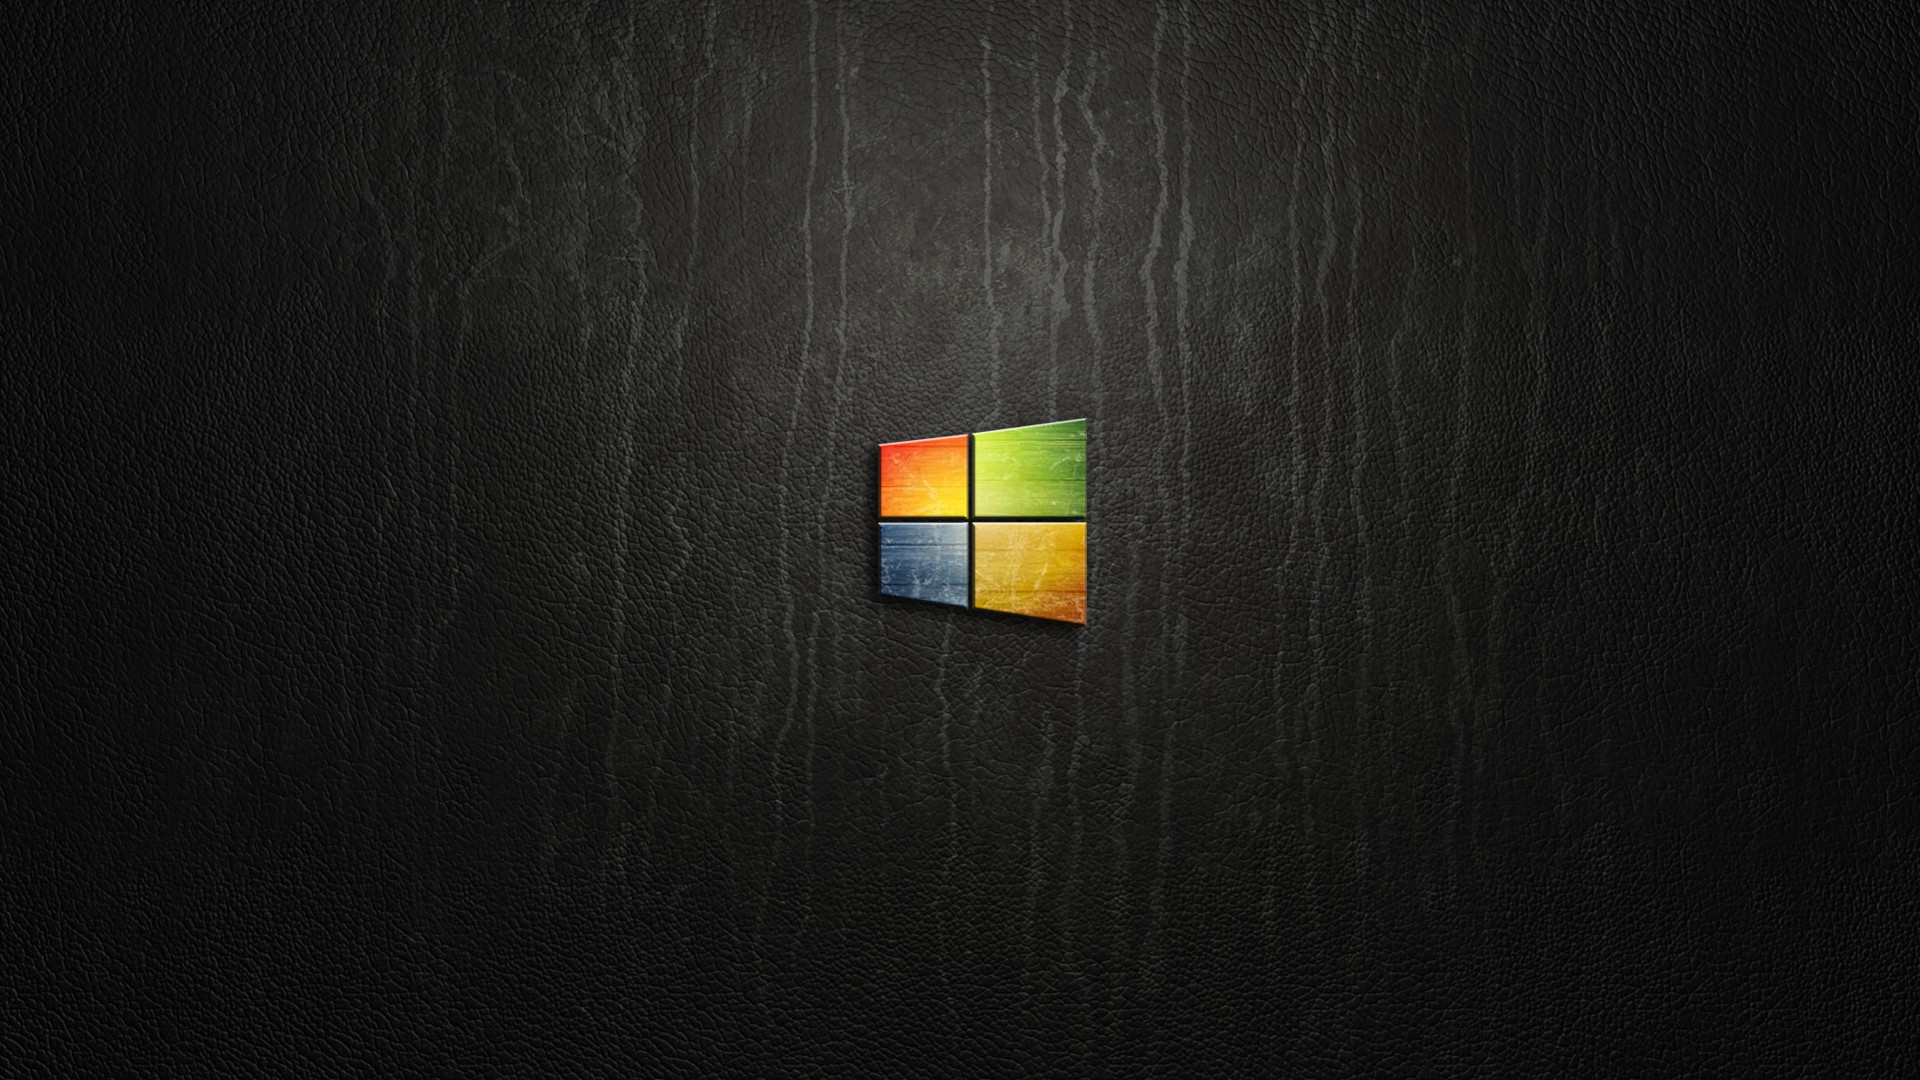 1920x1080 Windows 10 HD wallpapers 1080p | Windows 10 Wallpapers | Pinterest | Loghi,  Carte da parati e Grunge